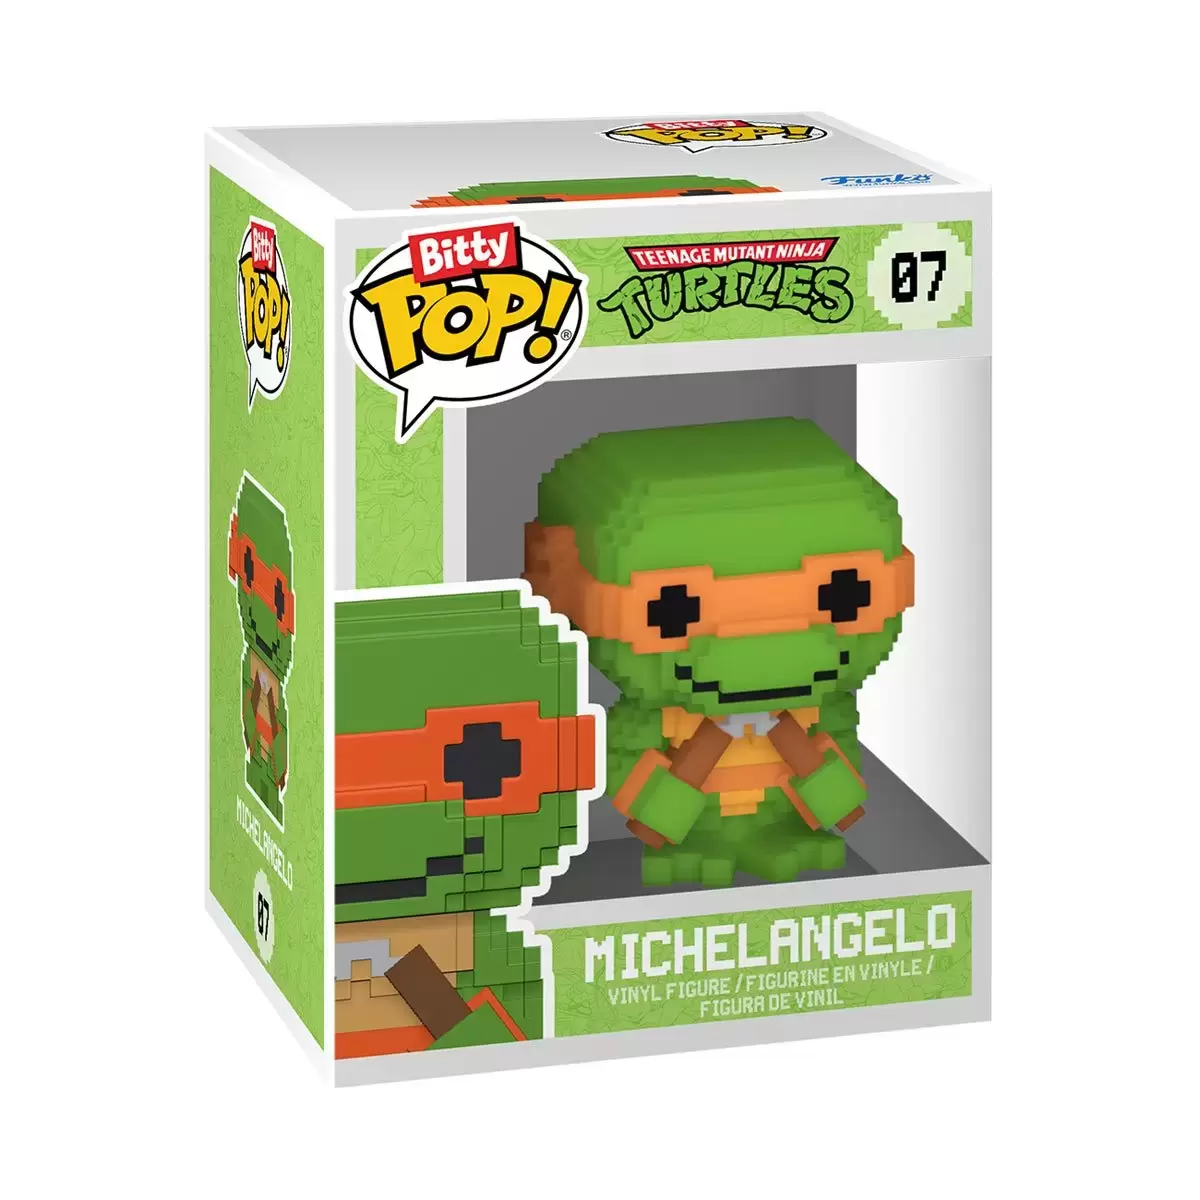 Bitty POP! - Teenage Mutant Ninja Turtles - Michelangelo 8 Bits